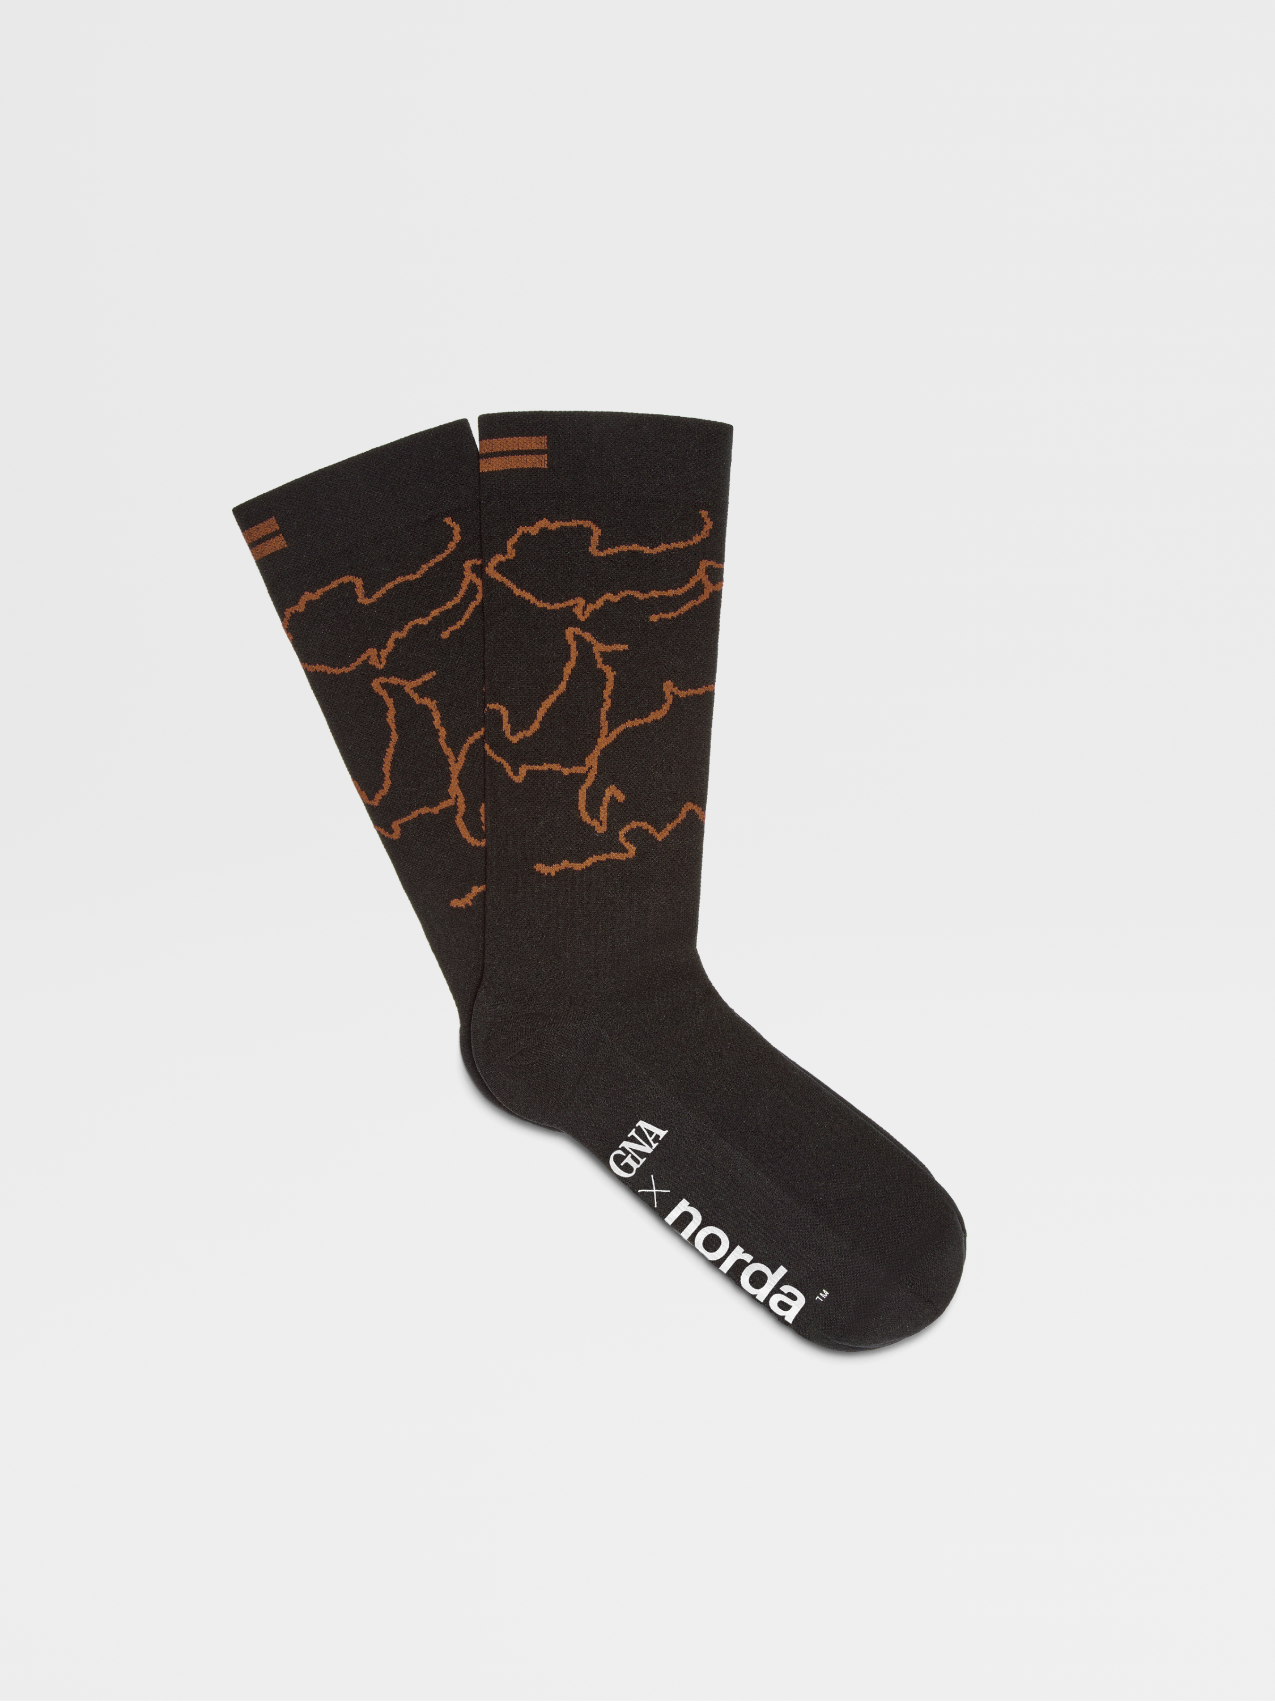 ZEGNA x norda™ Black Technical Fabric Mid Calf Socks